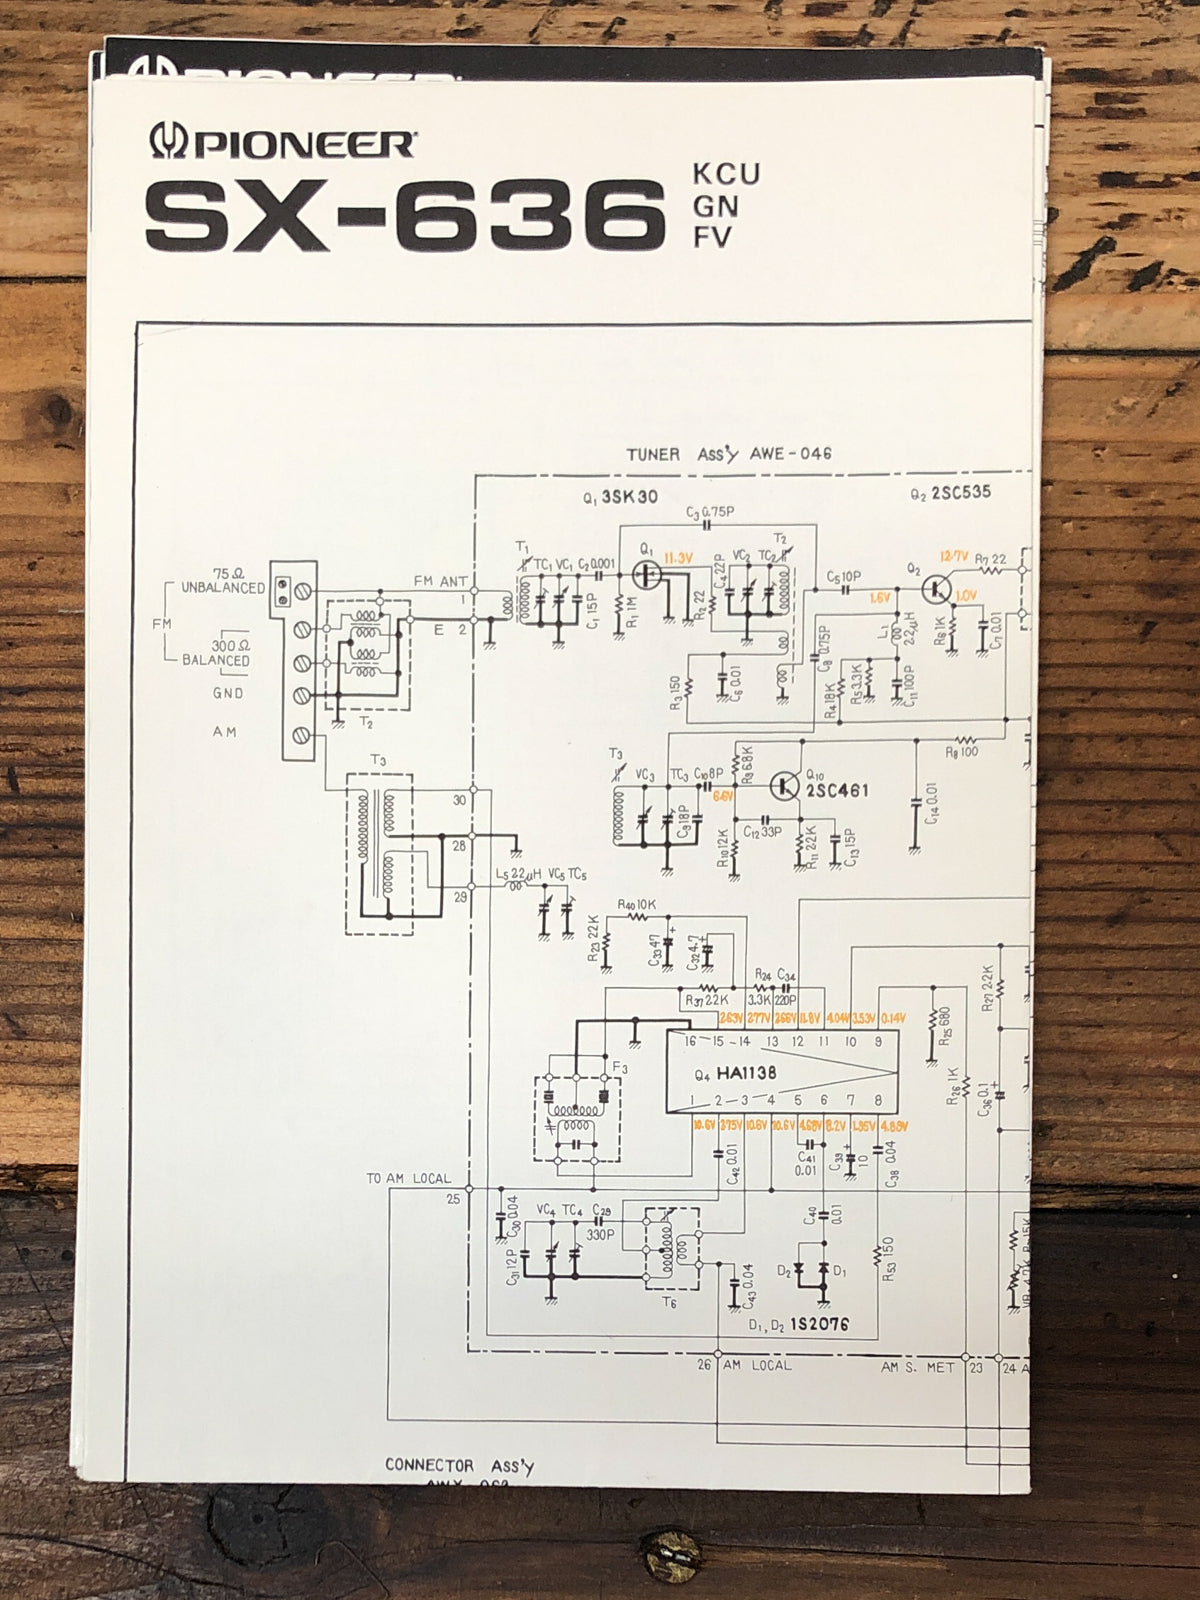 Pioneer SX-636 KCU Receiver Foldout Service Manual *Original*